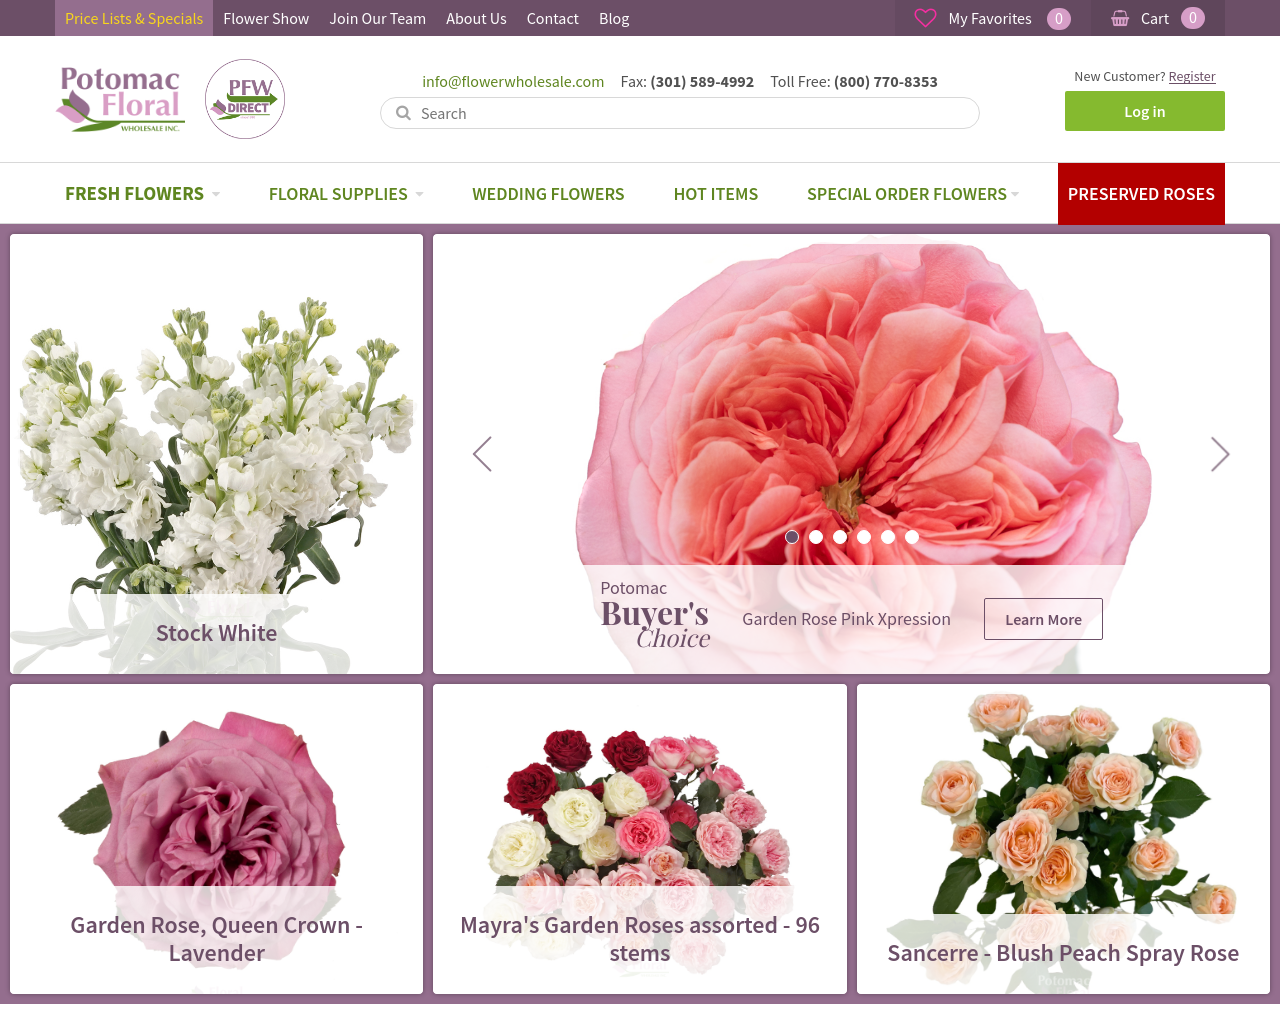 flowerwholesale.com